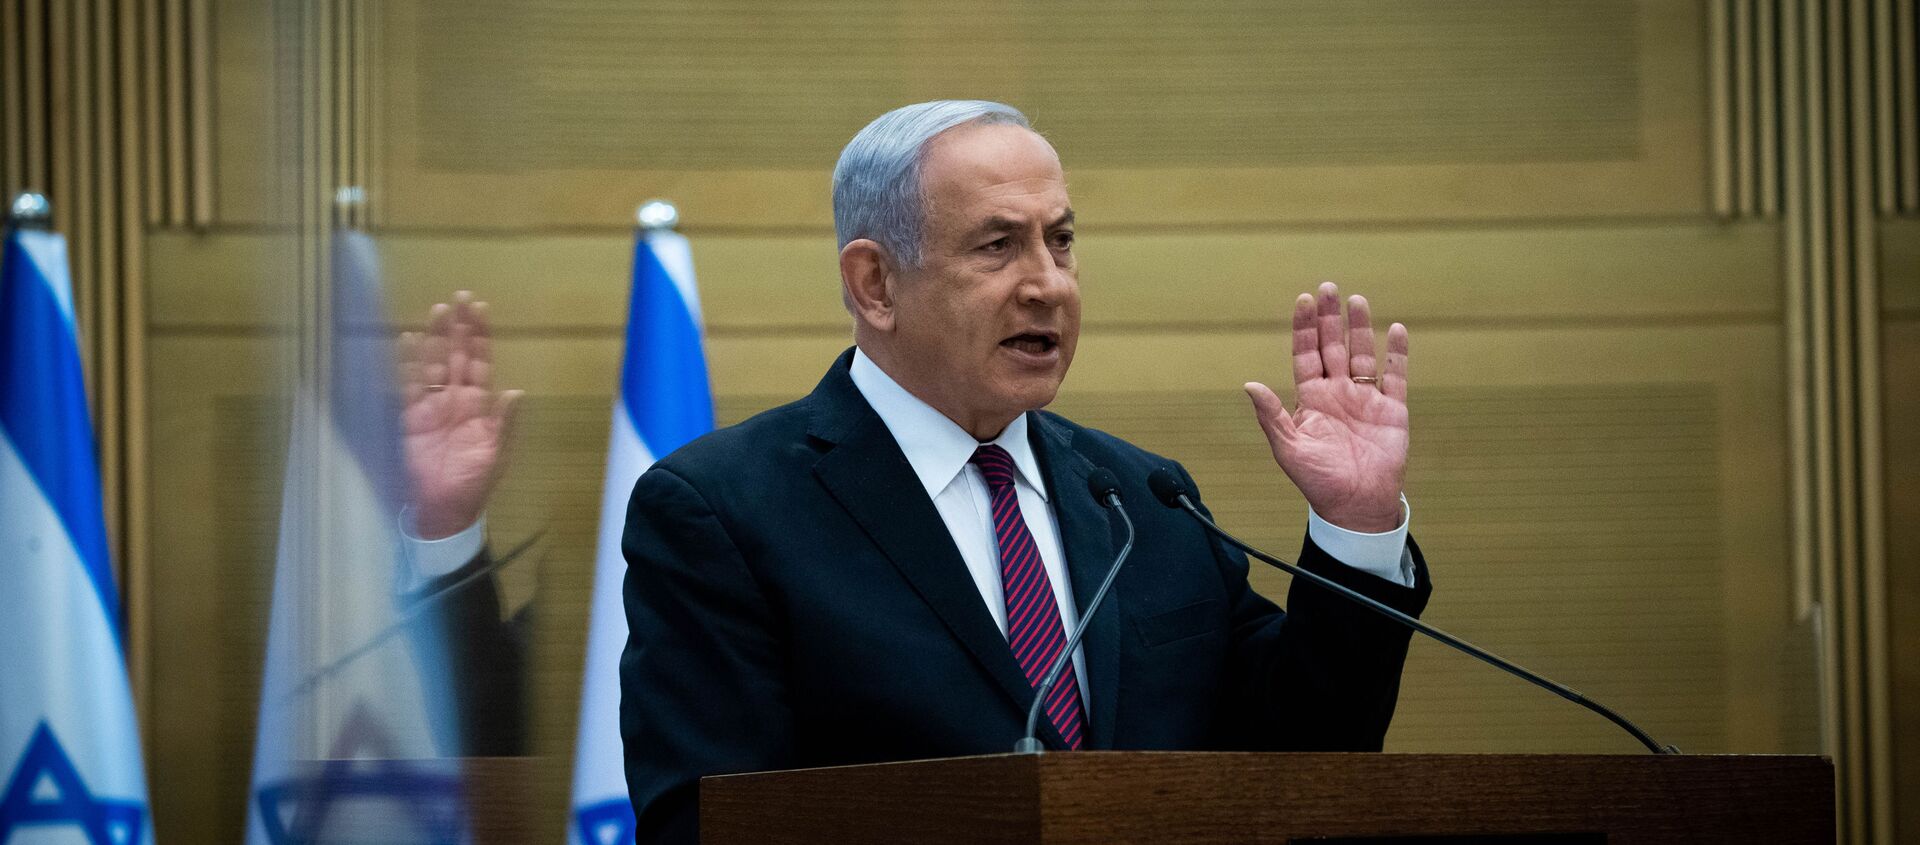 Israeli Prime Minister Benjamin Netanyahu delivers a statement to his Likud party MKs (members of Knesset), at the Likud centre in the Knesset in Jerusalem on December 2, 2020. - Sputnik International, 1920, 27.01.2021